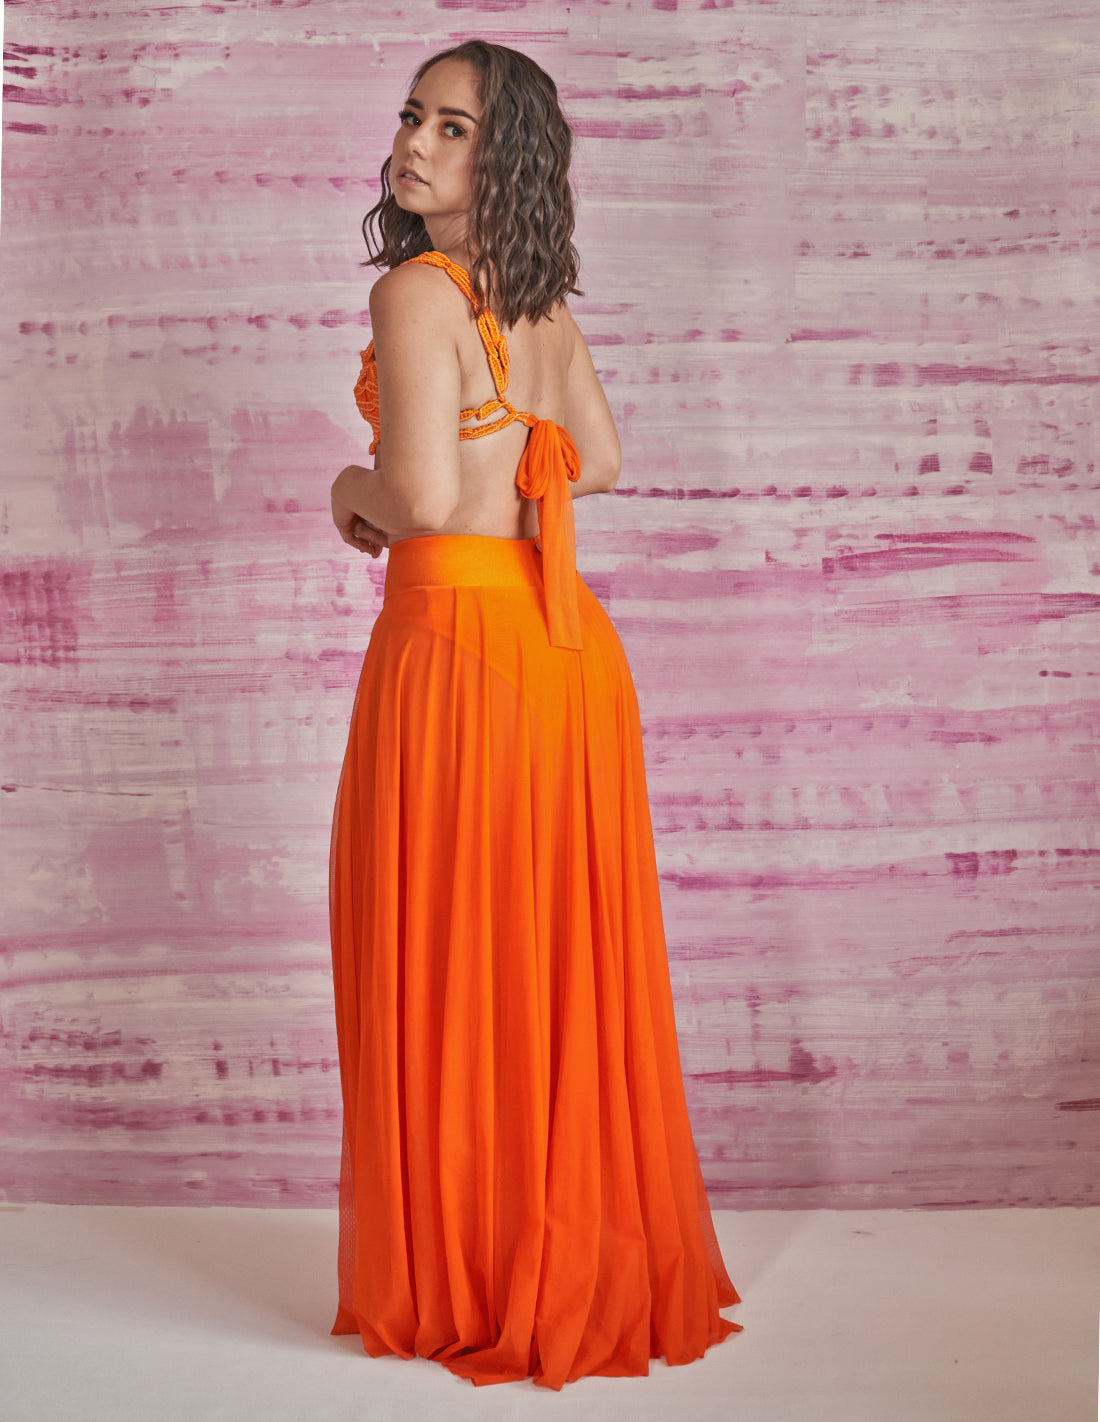 Cisne Dress Citrus Orange. Dress With Hand Woven Macramé In Citrus Orange. Entreaguas